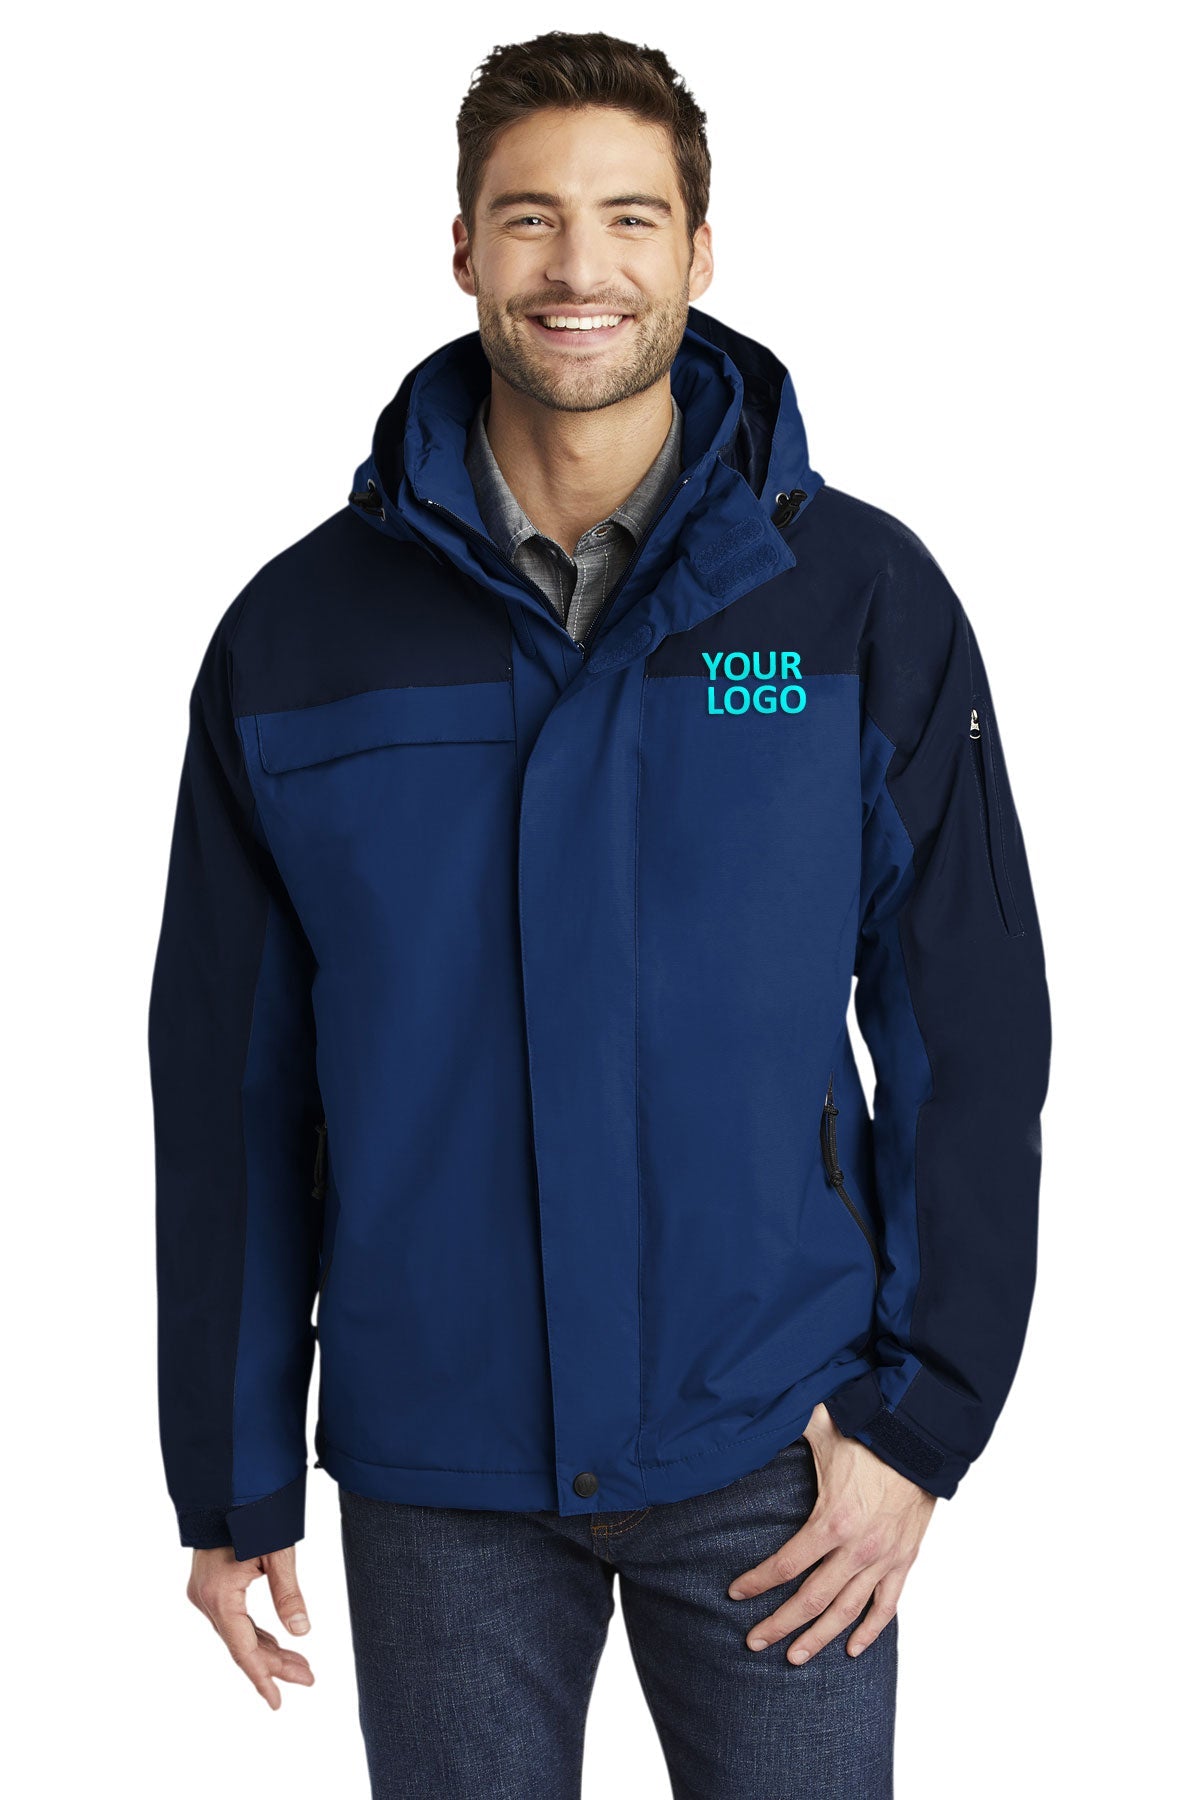 Port Authority Regatta Blue/ Navy TLJ792 business jackets with logo